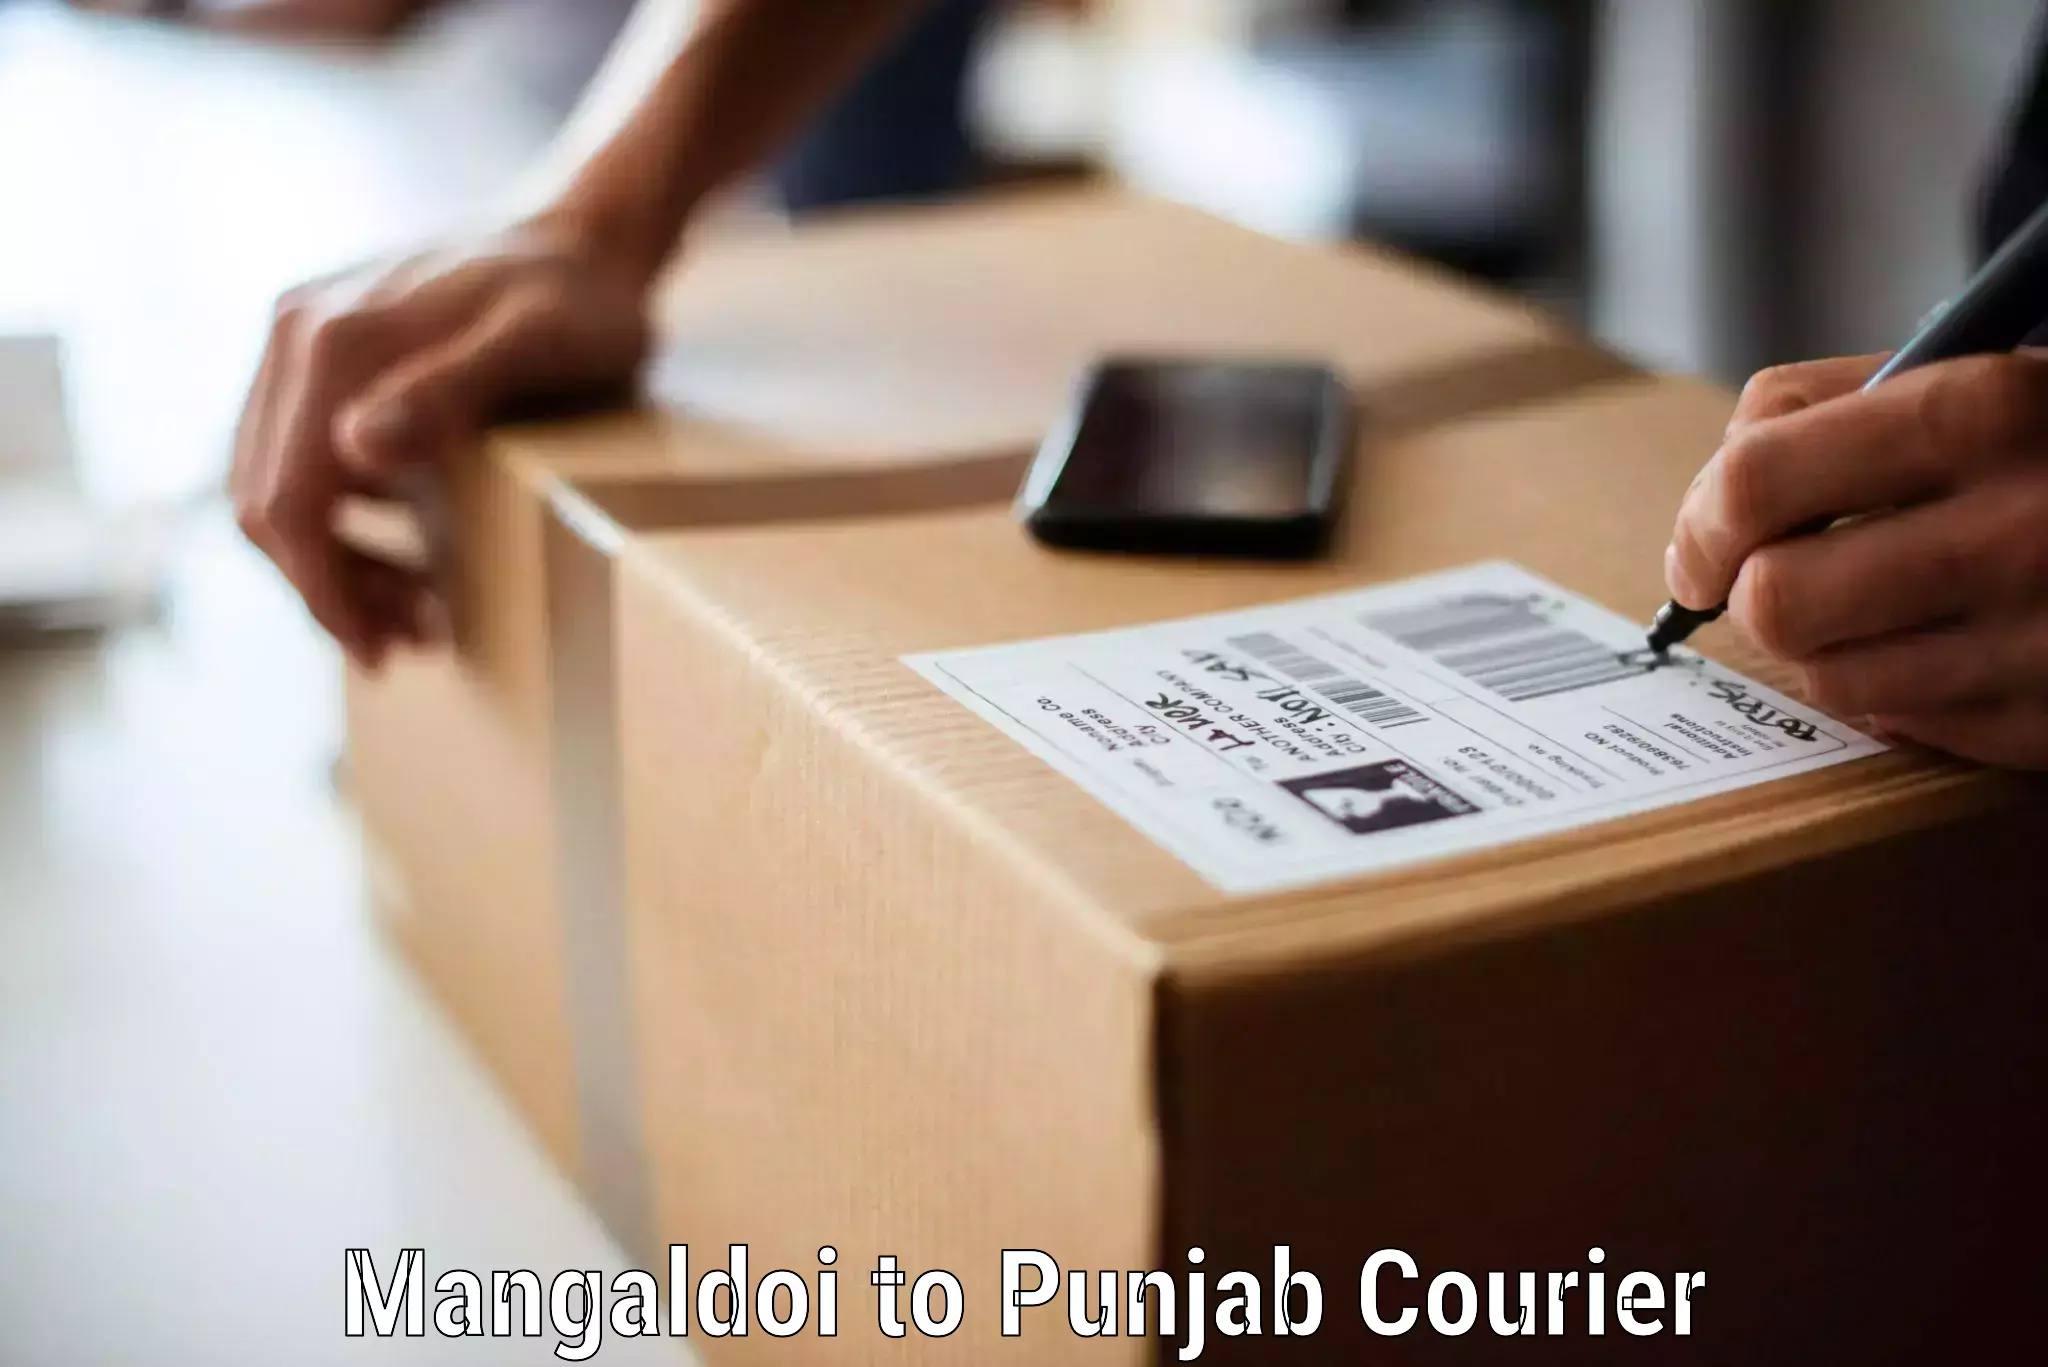 Moving and packing experts Mangaldoi to Punjab